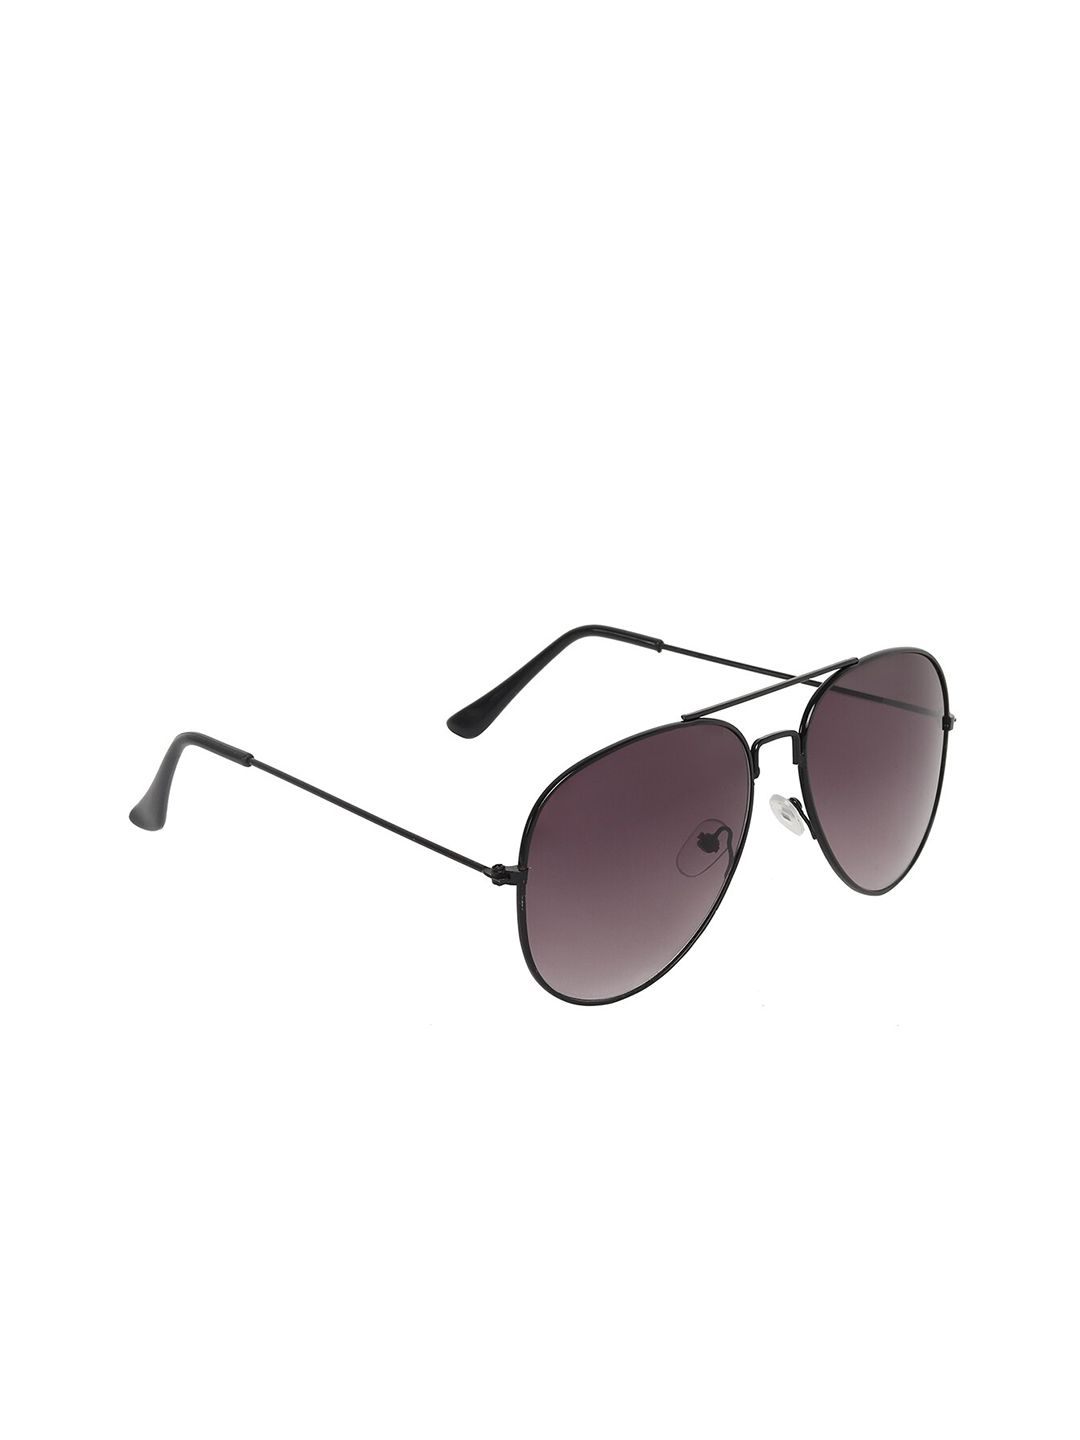 CRIBA Unisex Grey Lens & Black Aviator Sunglasses with UV Protected Lens Price in India